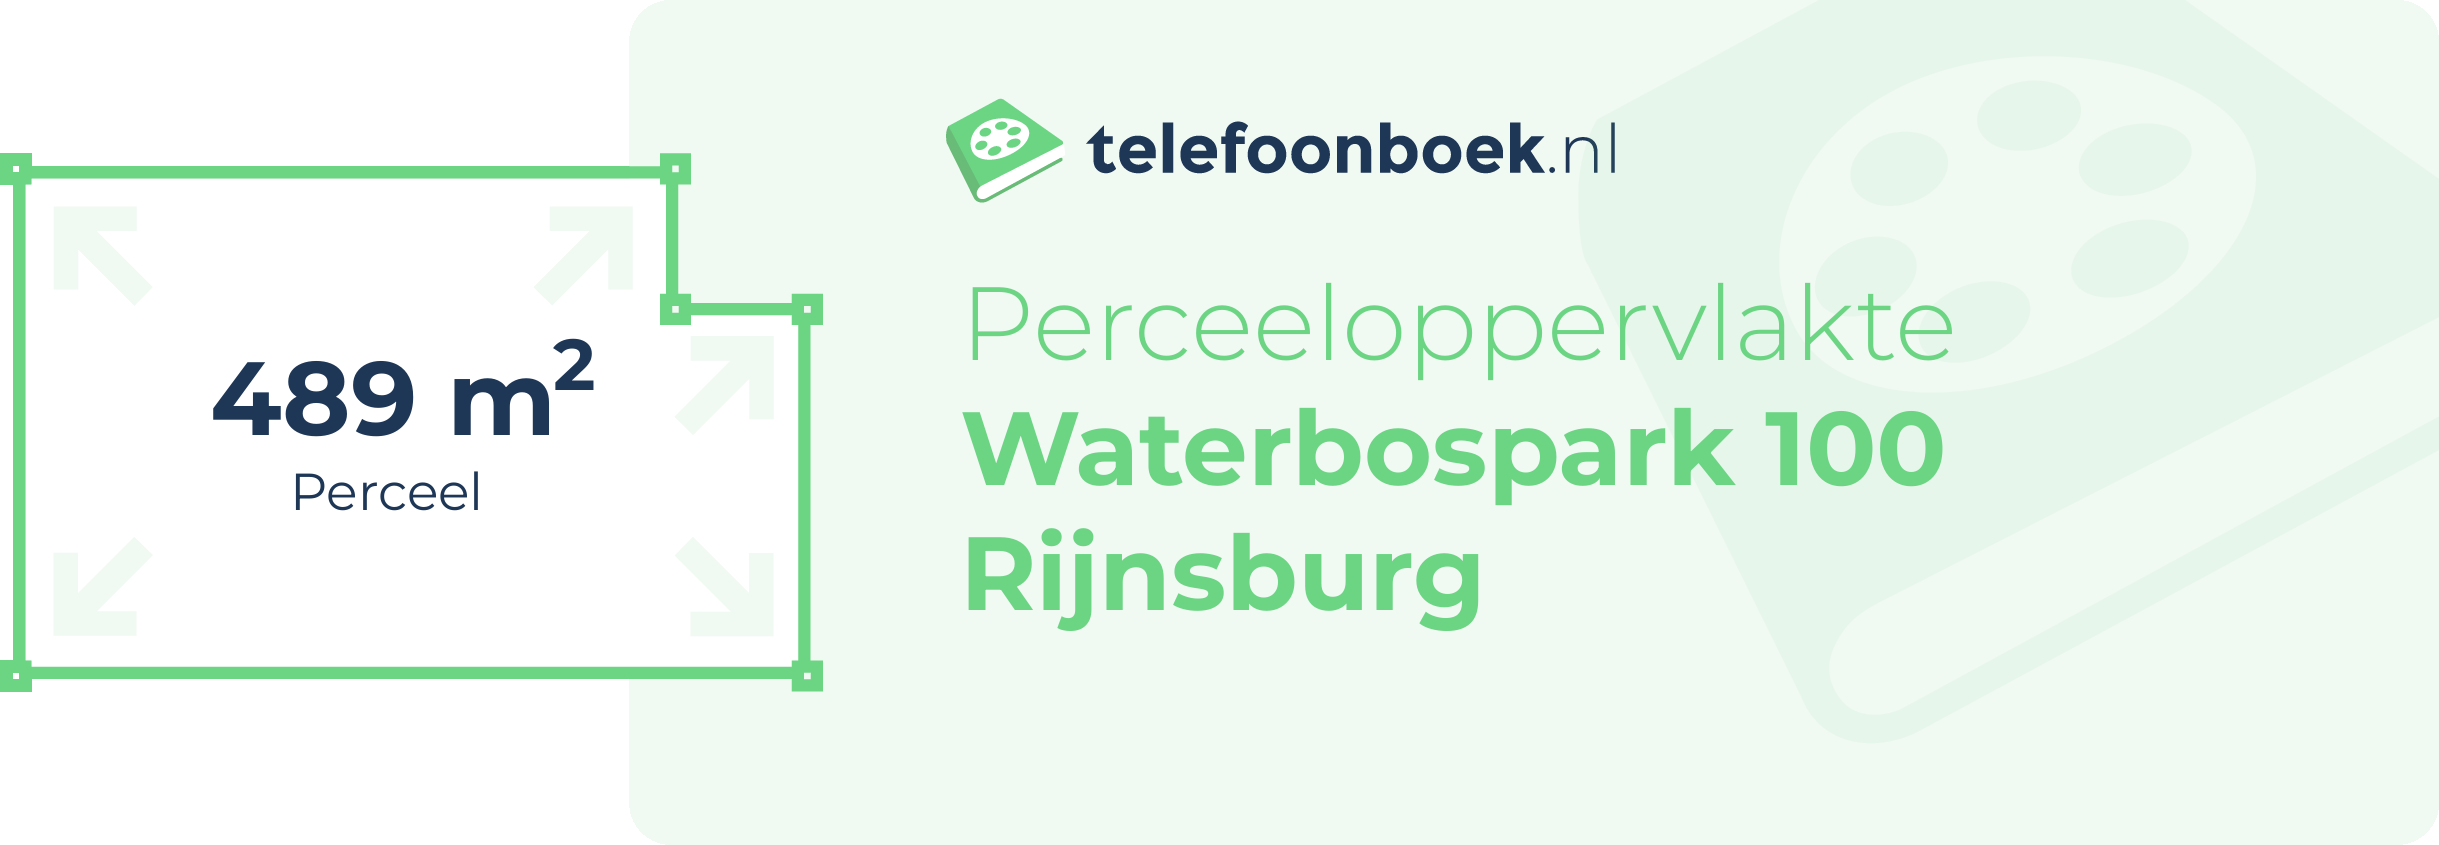 Perceeloppervlakte Waterbospark 100 Rijnsburg